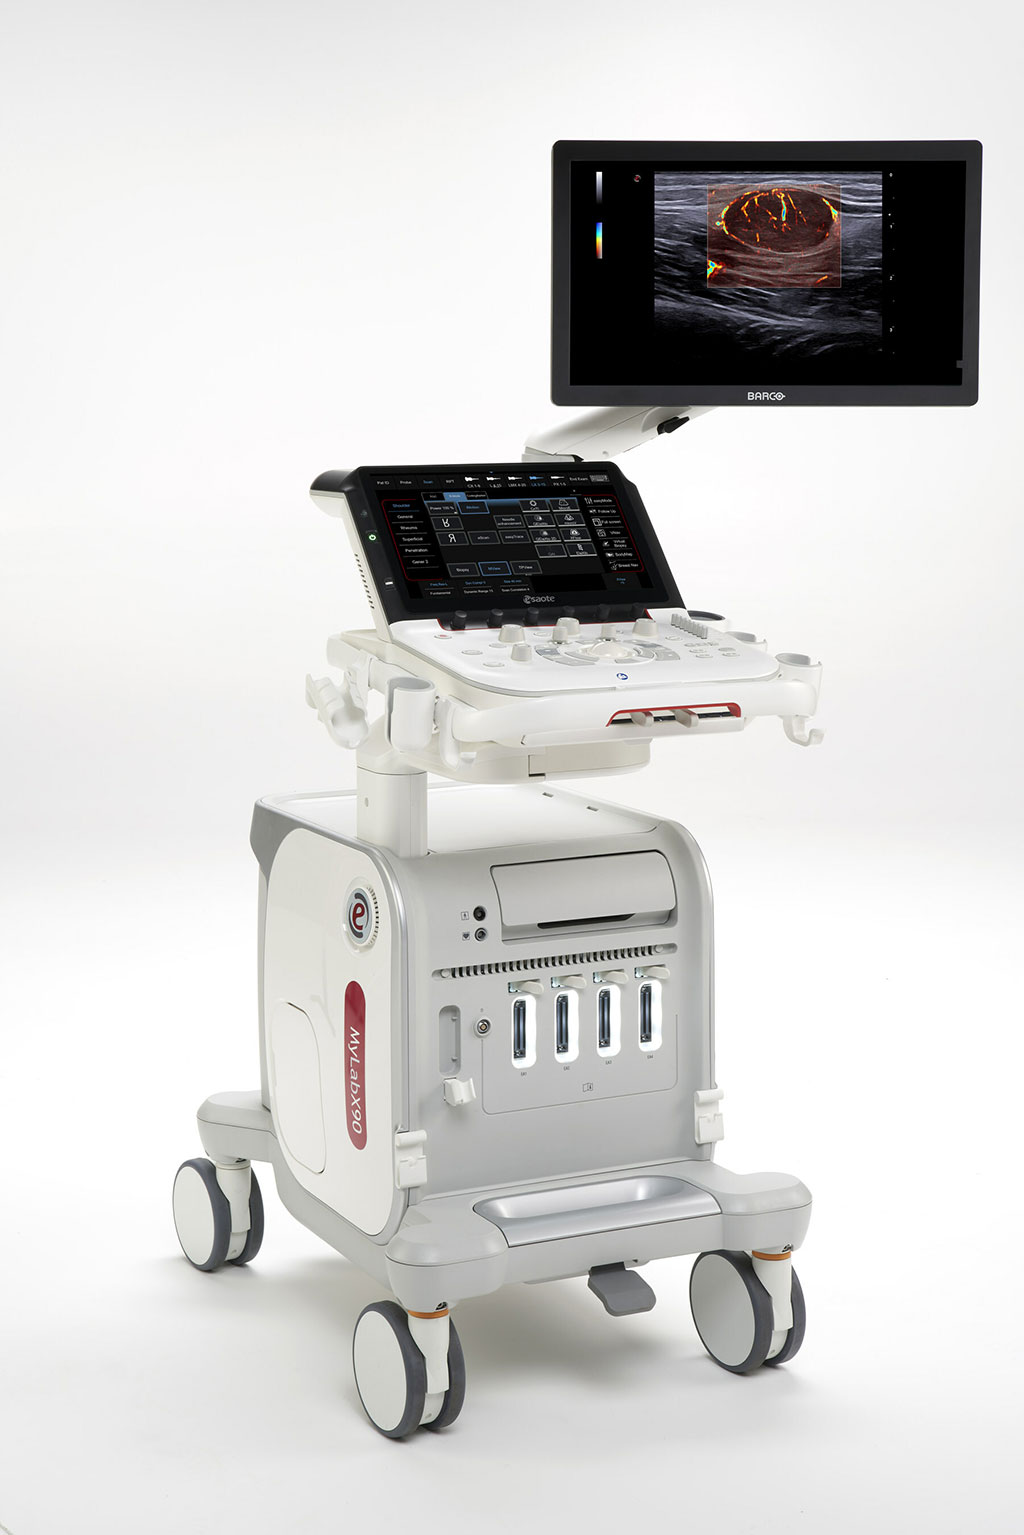 Image: The new MyLab X90 premium ultrasound system (Photo courtesy of Esaote)